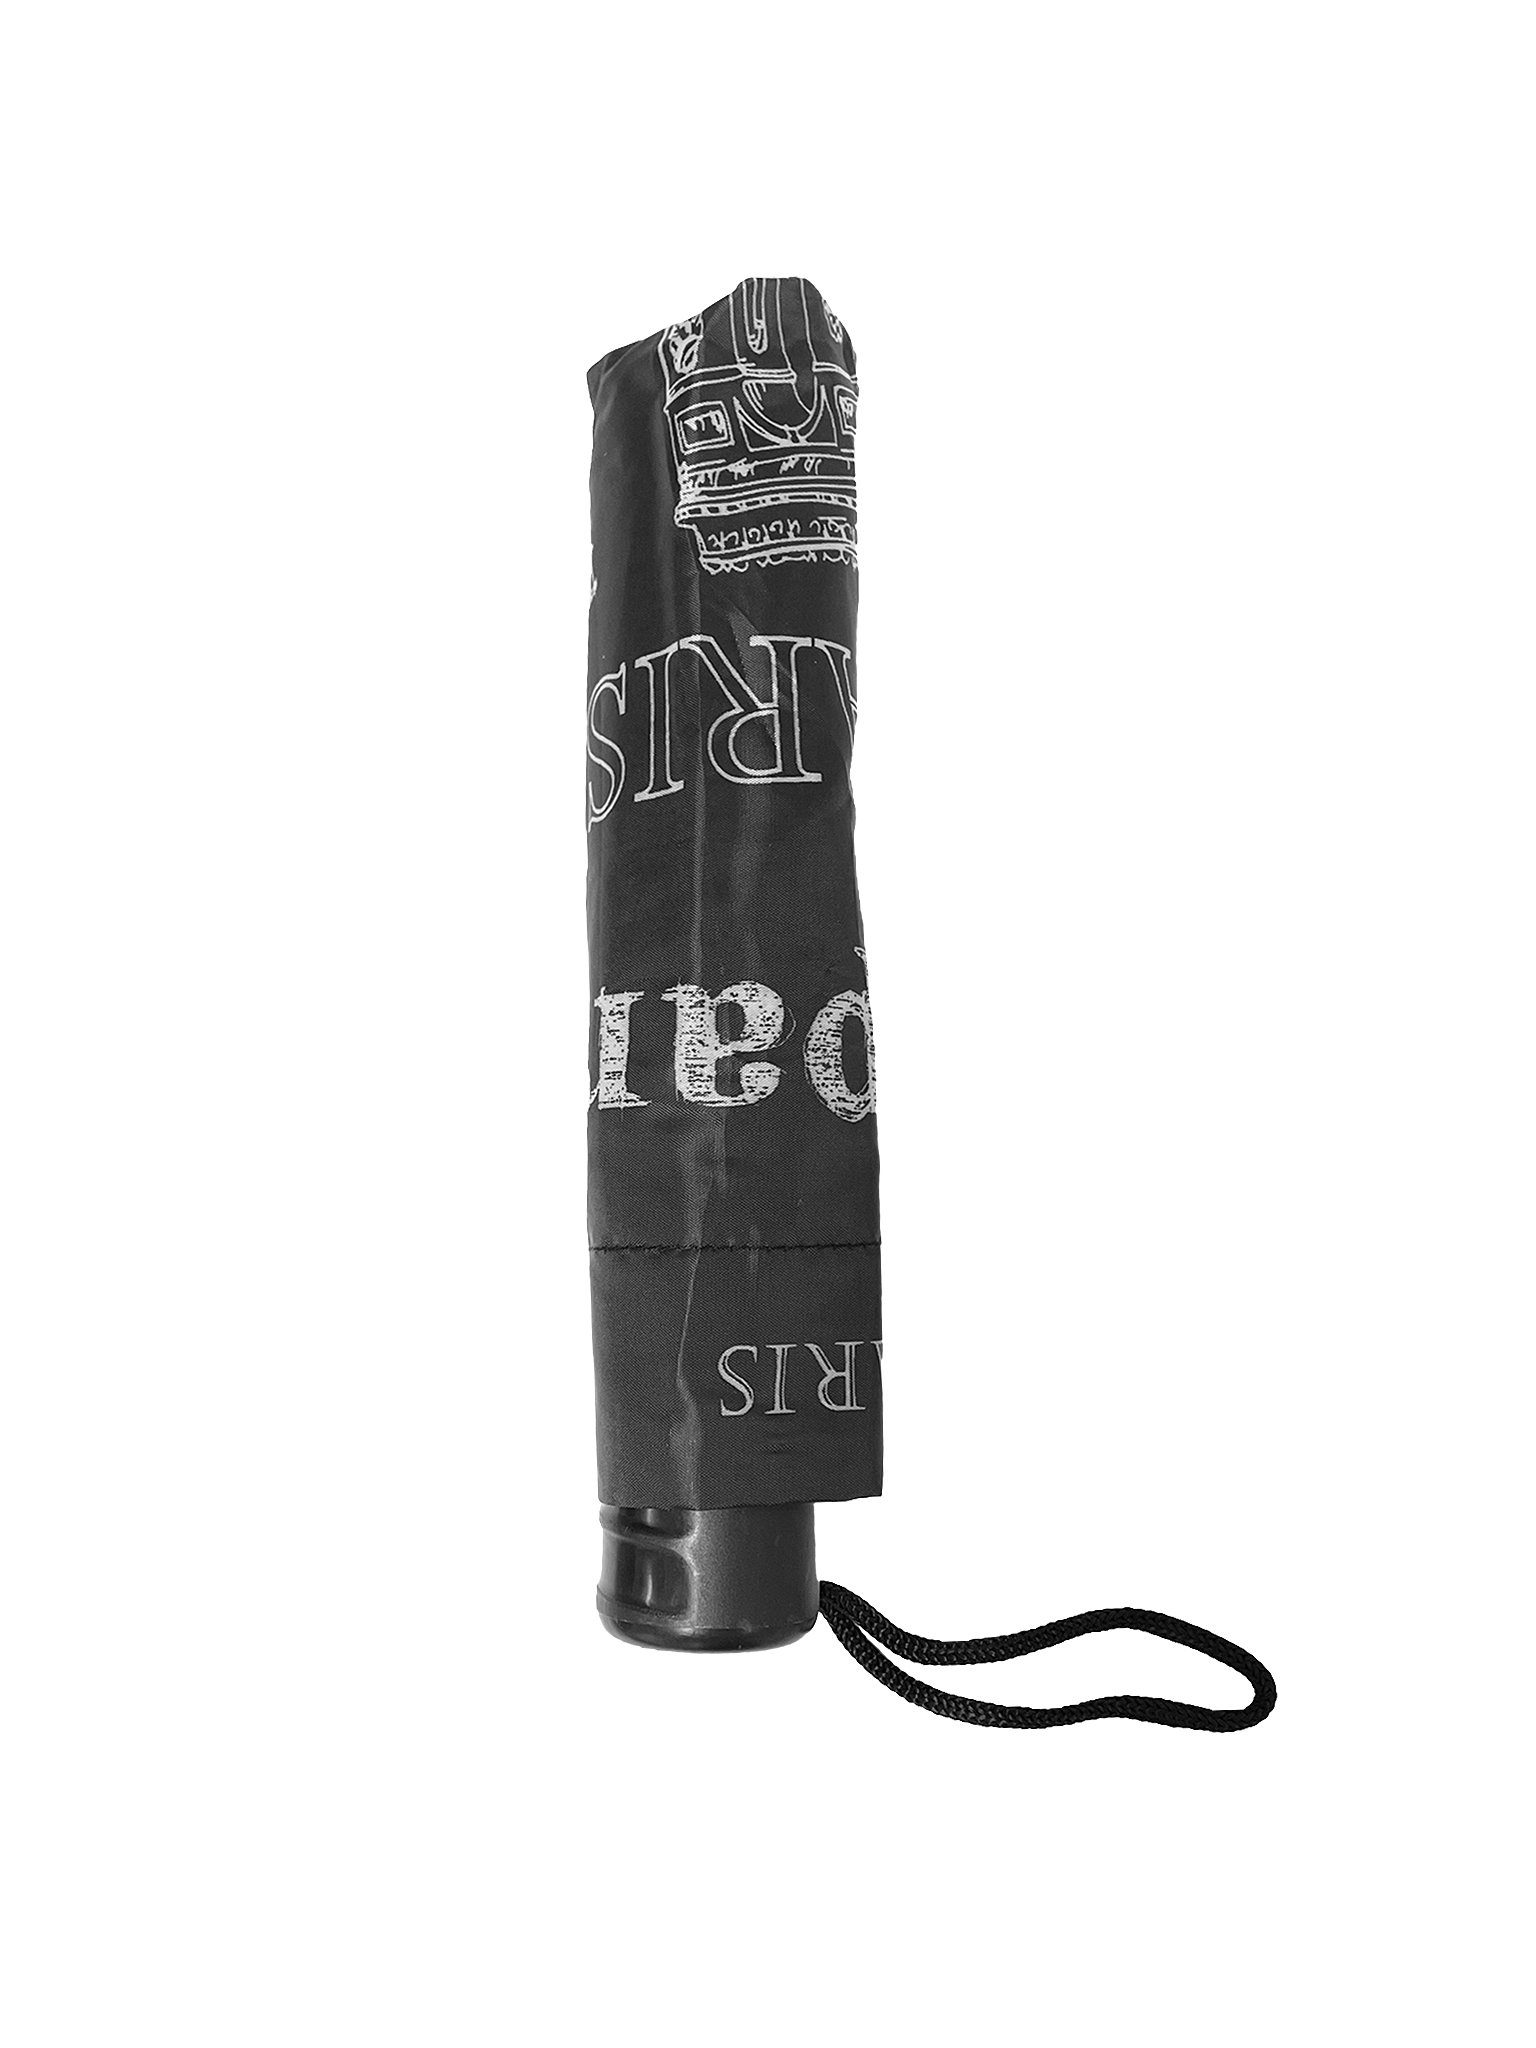 ANELY Taschenregenschirm Kleiner Paris Regenschirm Taschenschirm, 6746 Schwarz in Gemustert